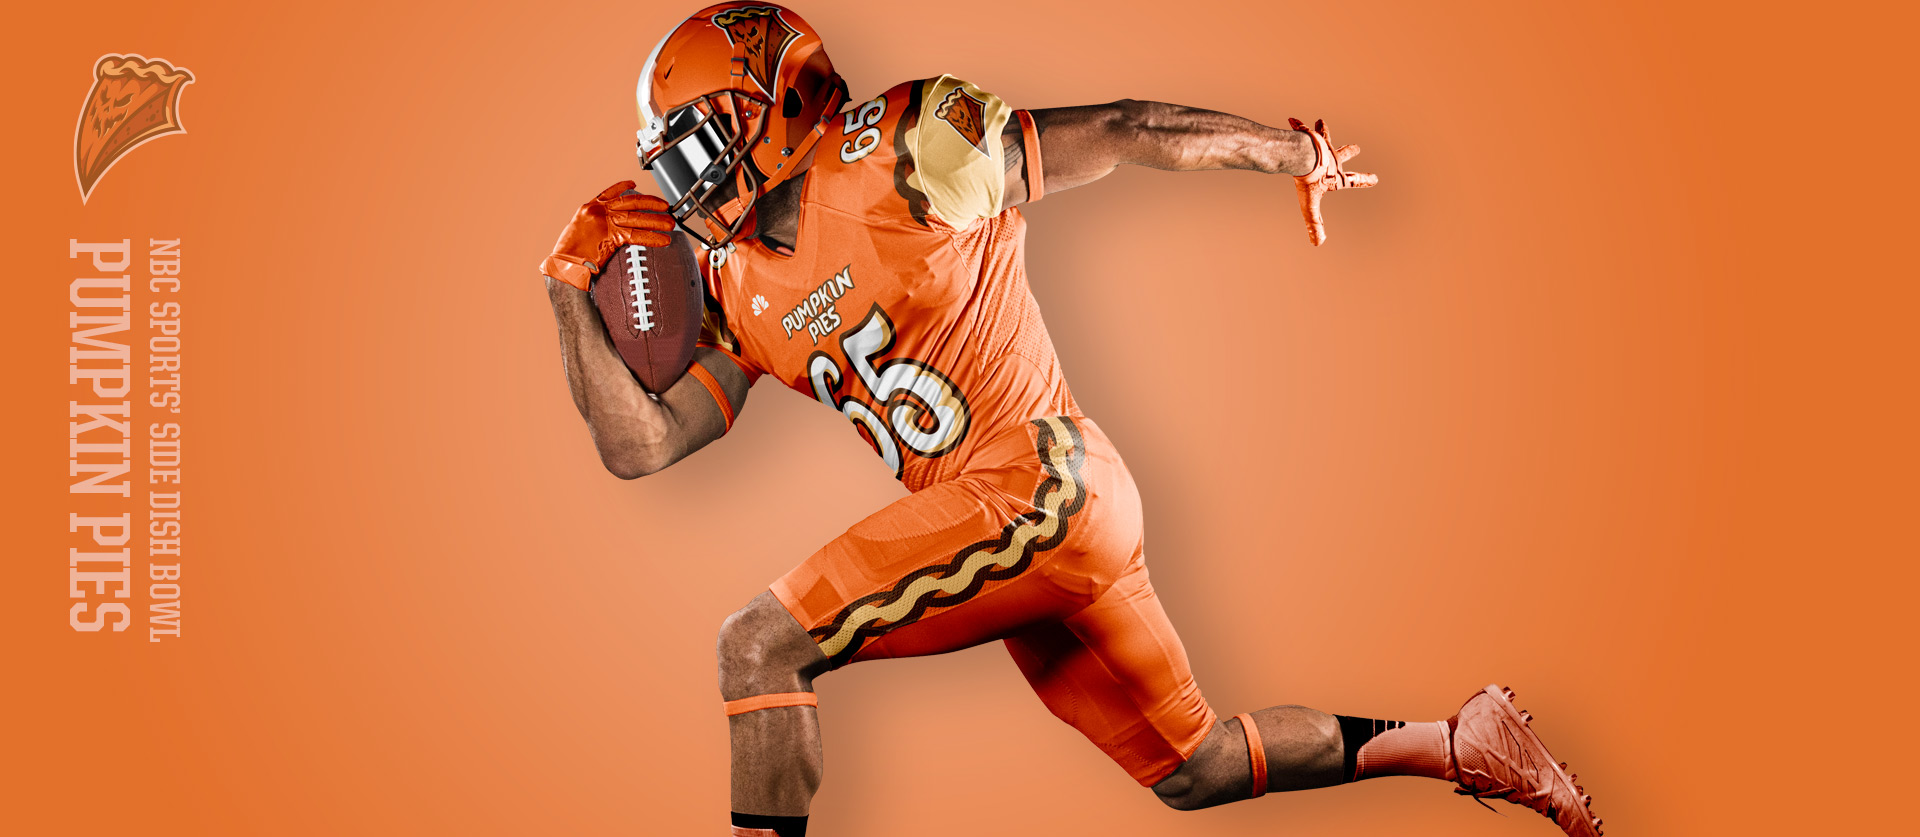 Pumpkin Pies - Football Uniform Design for NBC Sports Thanksgiving Side Dish Bowl